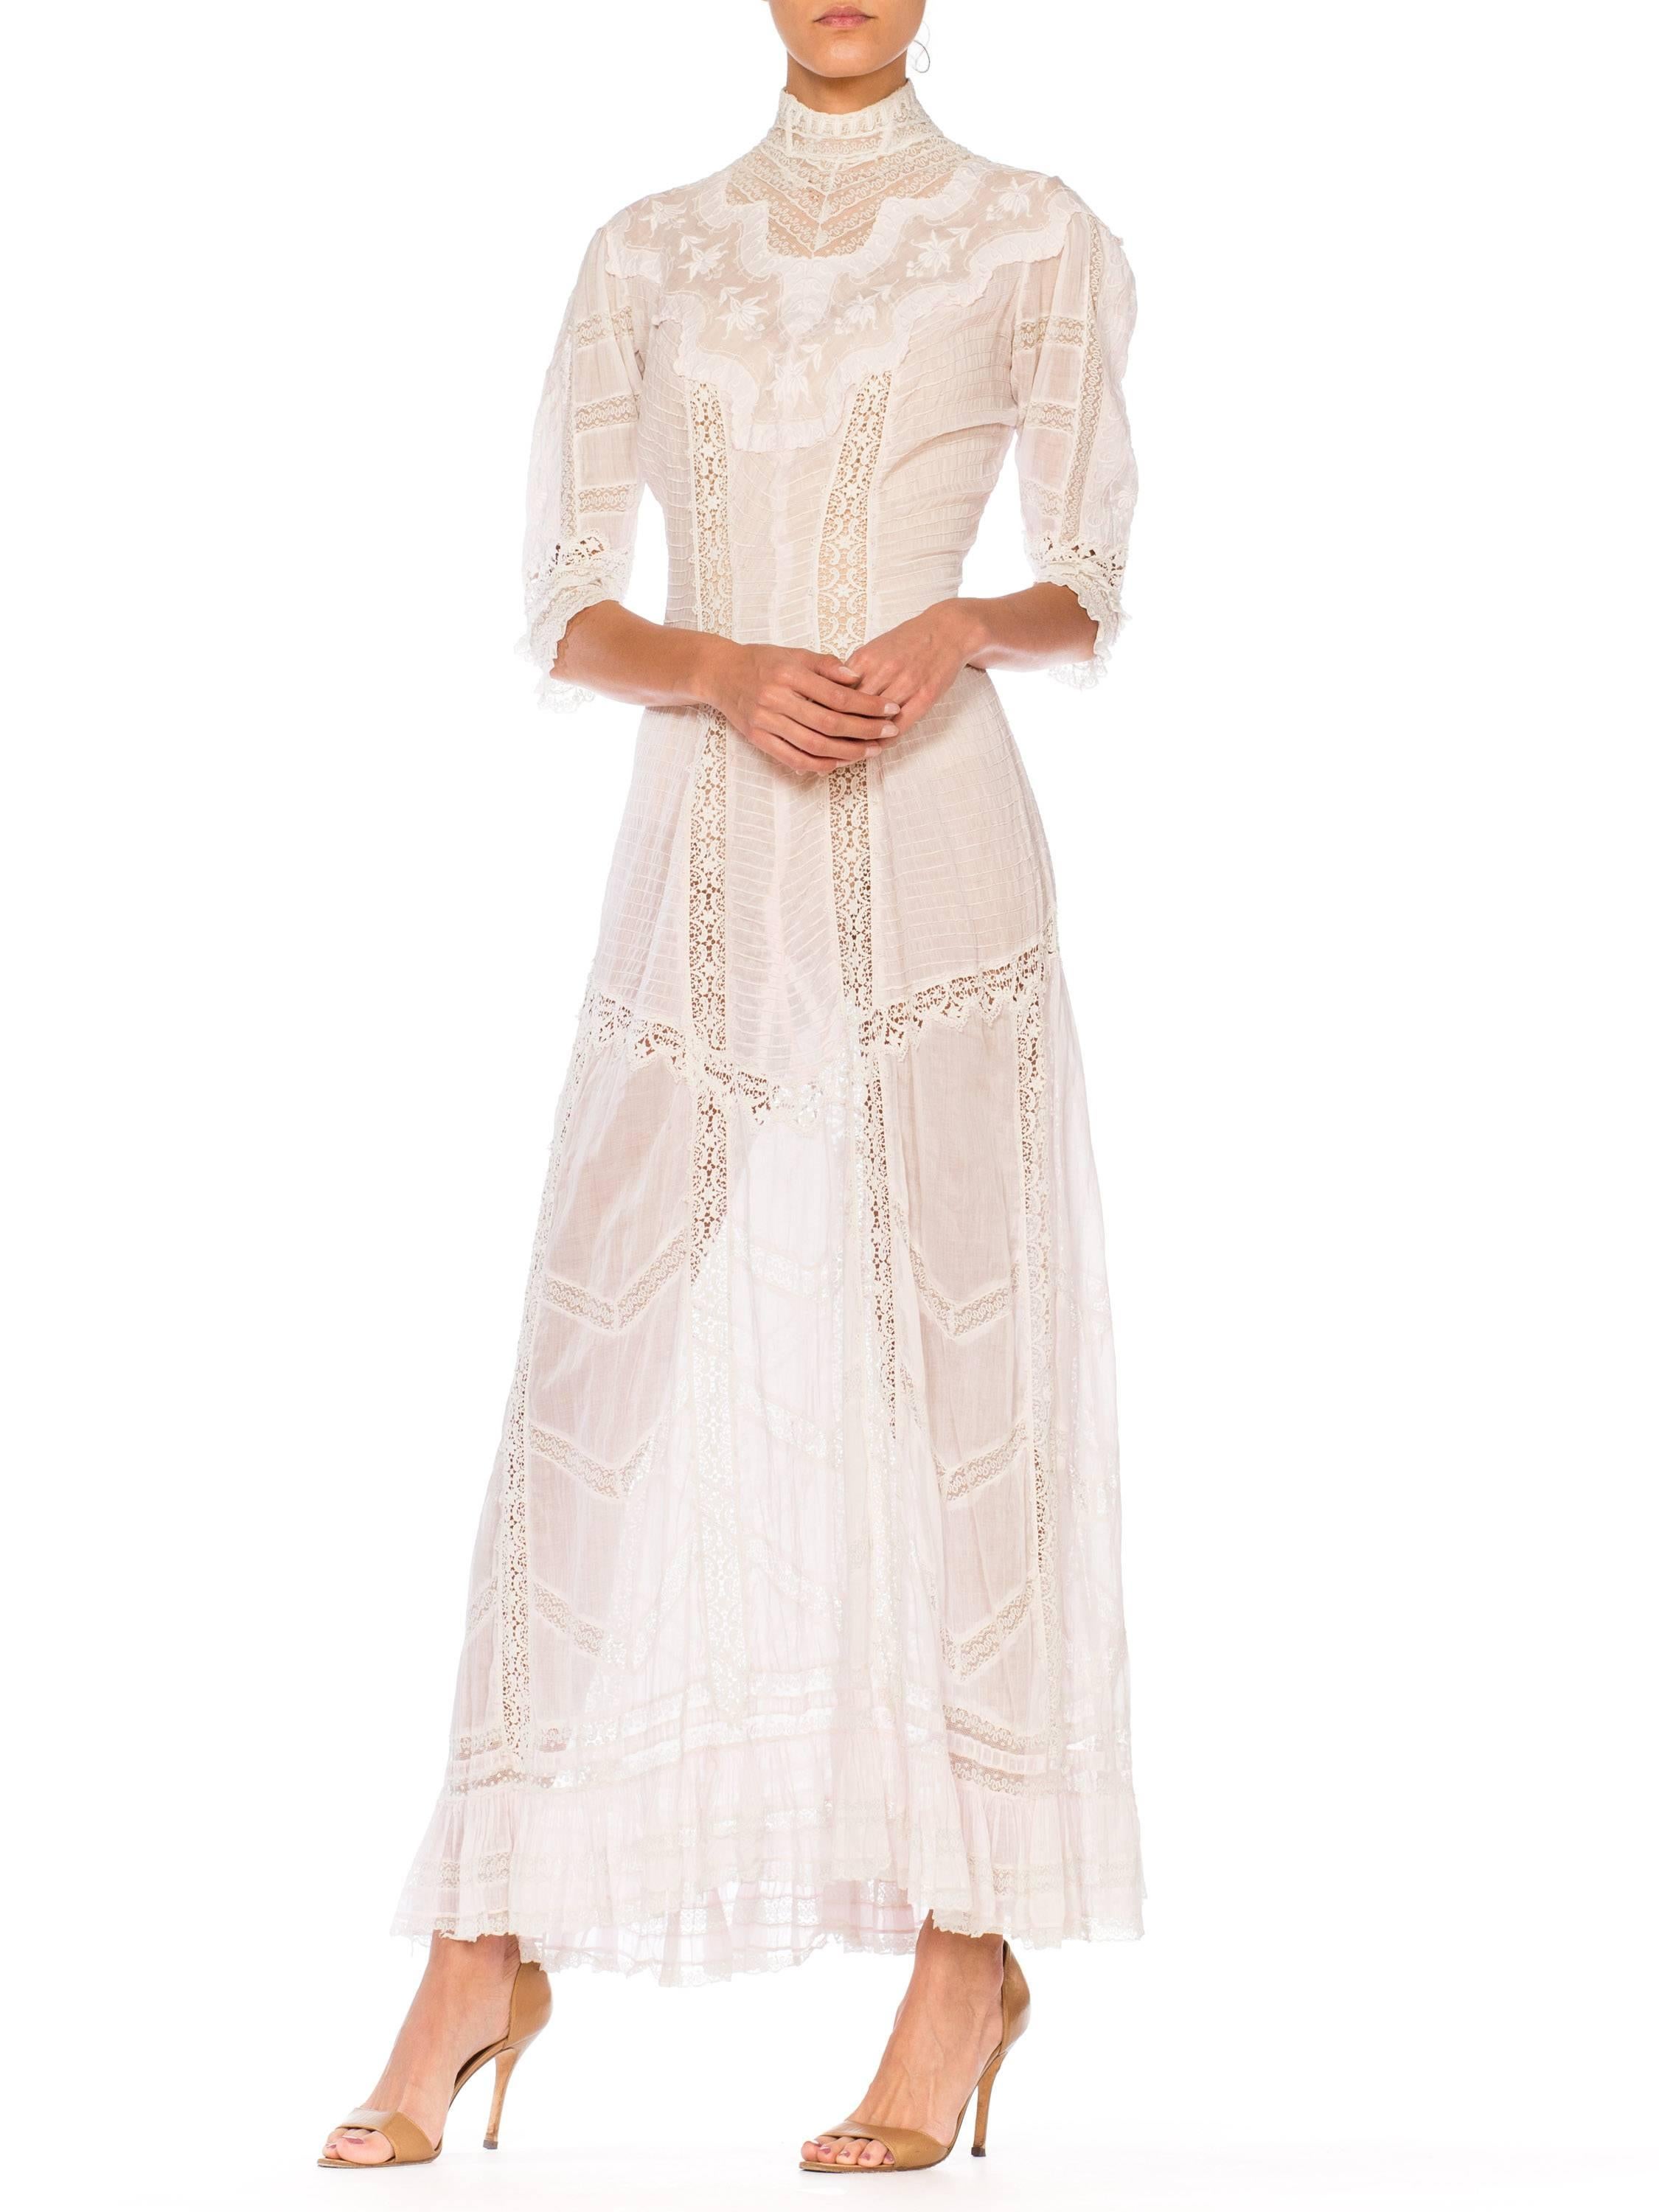 Belle Epoque Swan Neck Princess Line Victorian Organic Cotton and Lace Tea Dress 5